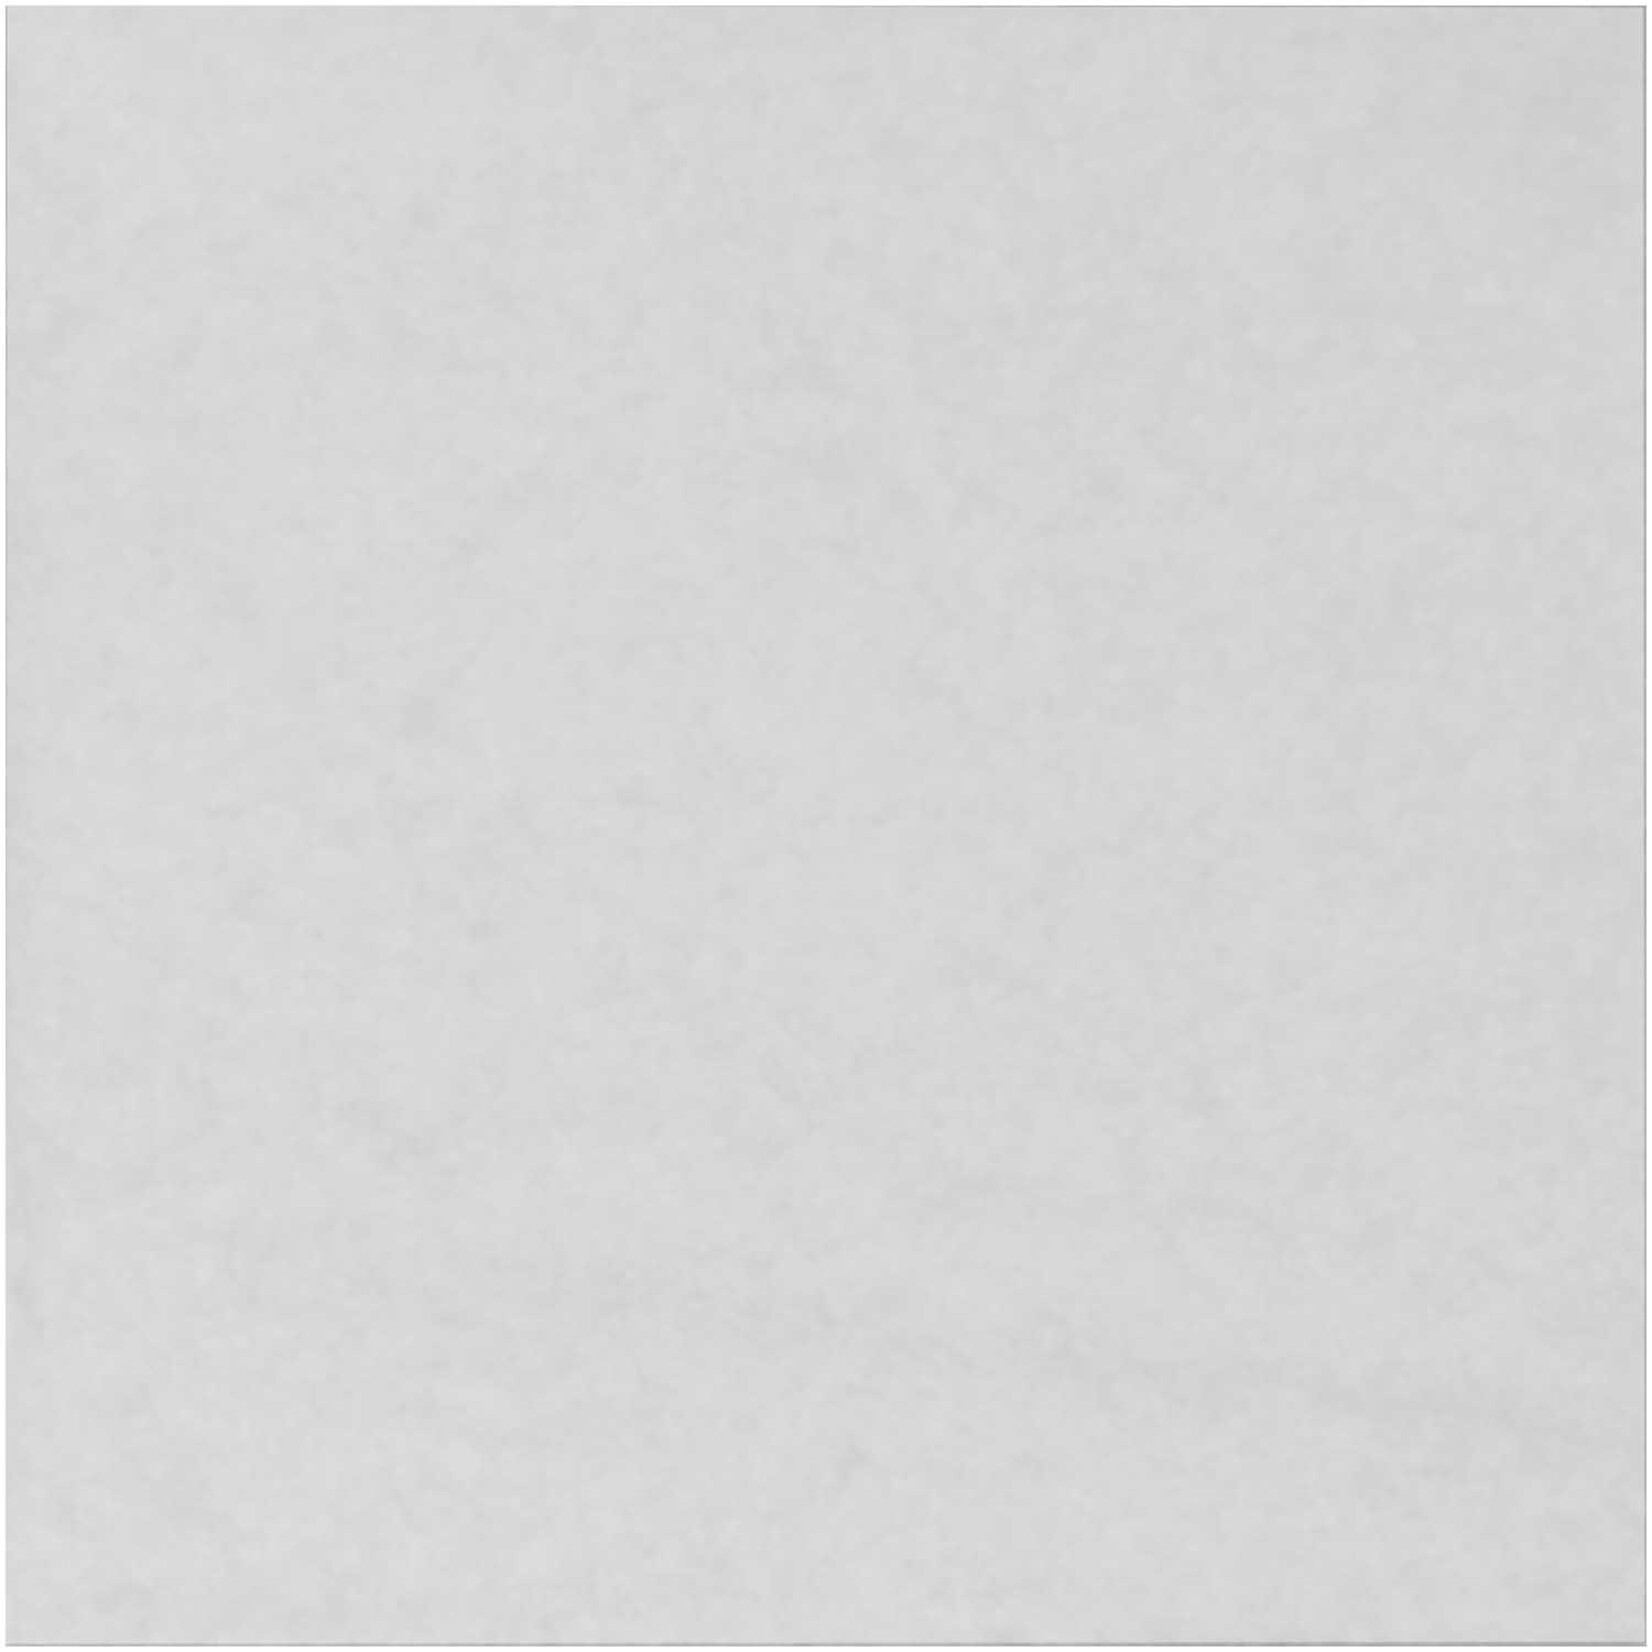 RICO Tissue paper, light grey, 5 sheets, 50 x 70 cm, ca. 20 g/mÃ‚Â²FSC MIX